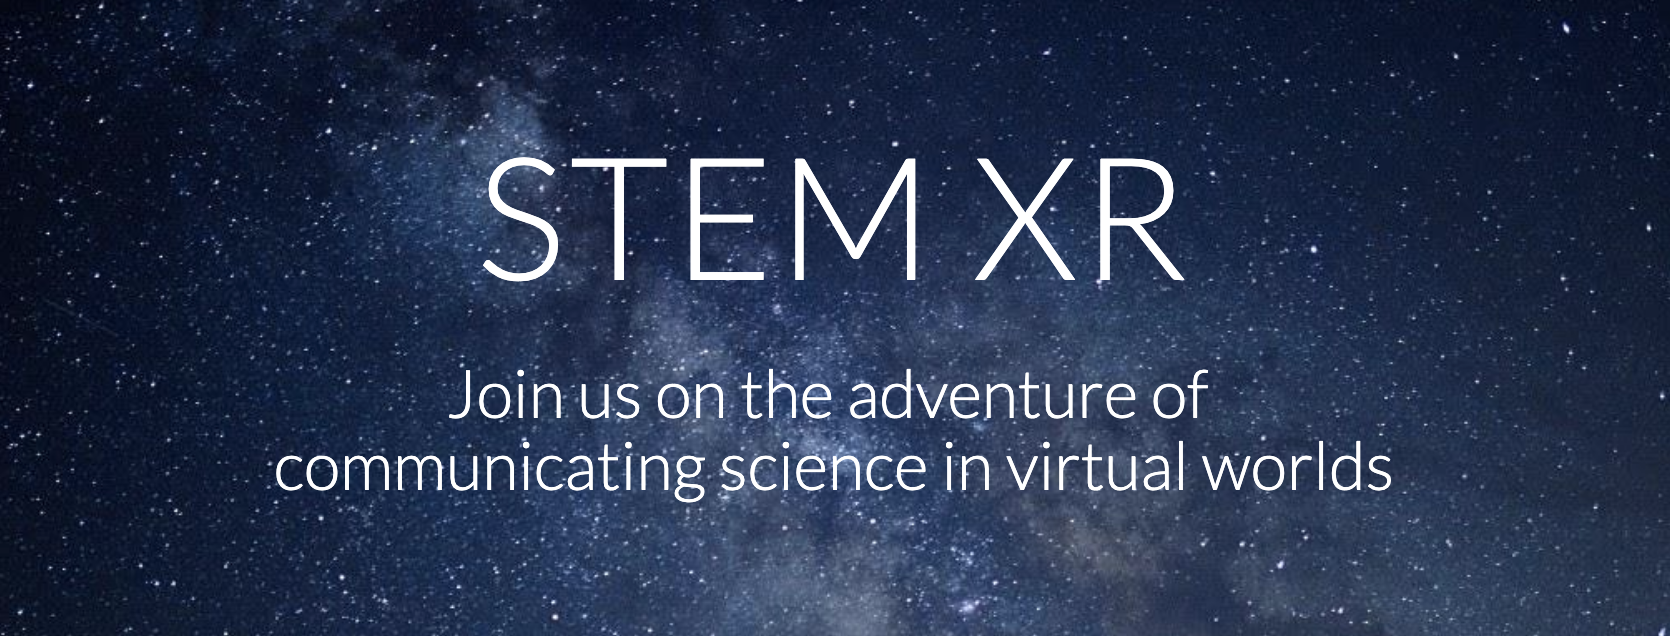 STEM XR: Outreach in Virtual Worlds Workshop